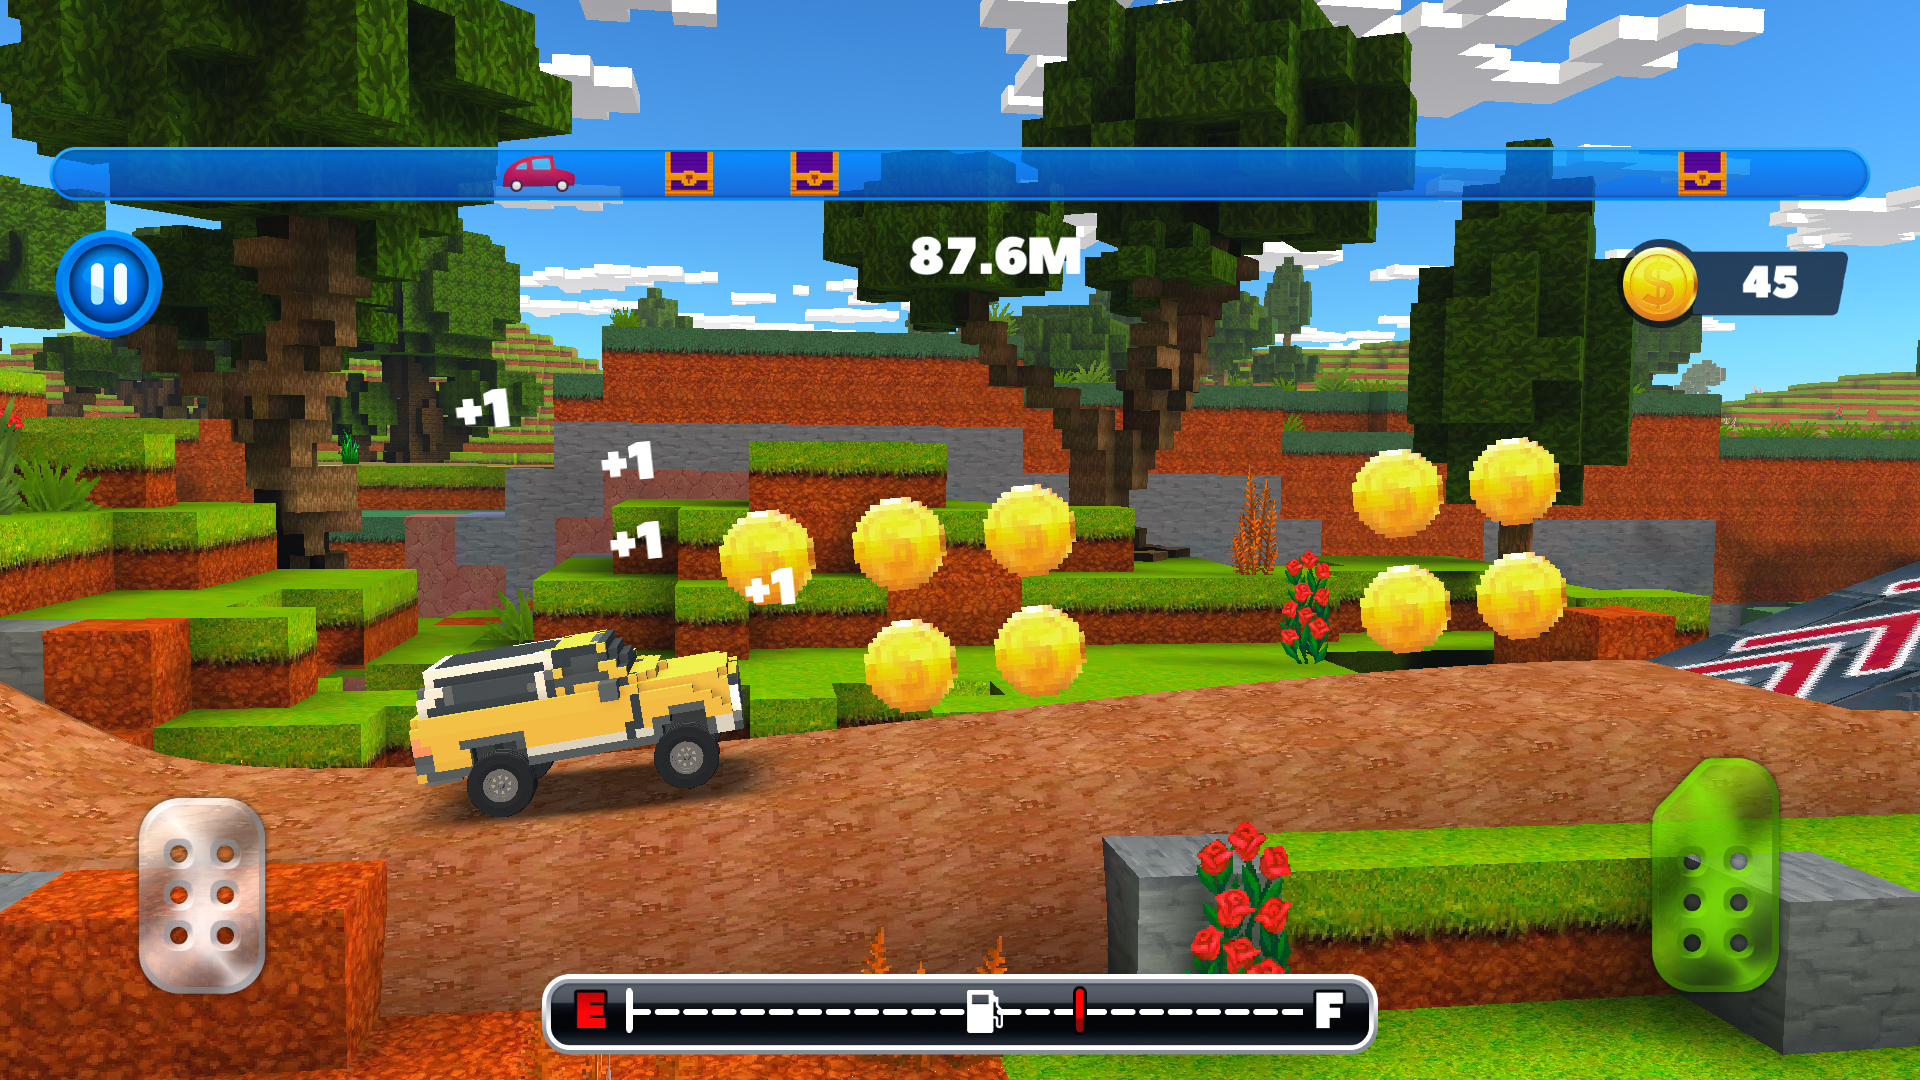 Blocky Rider: Roads Racing - Android game screenshots.